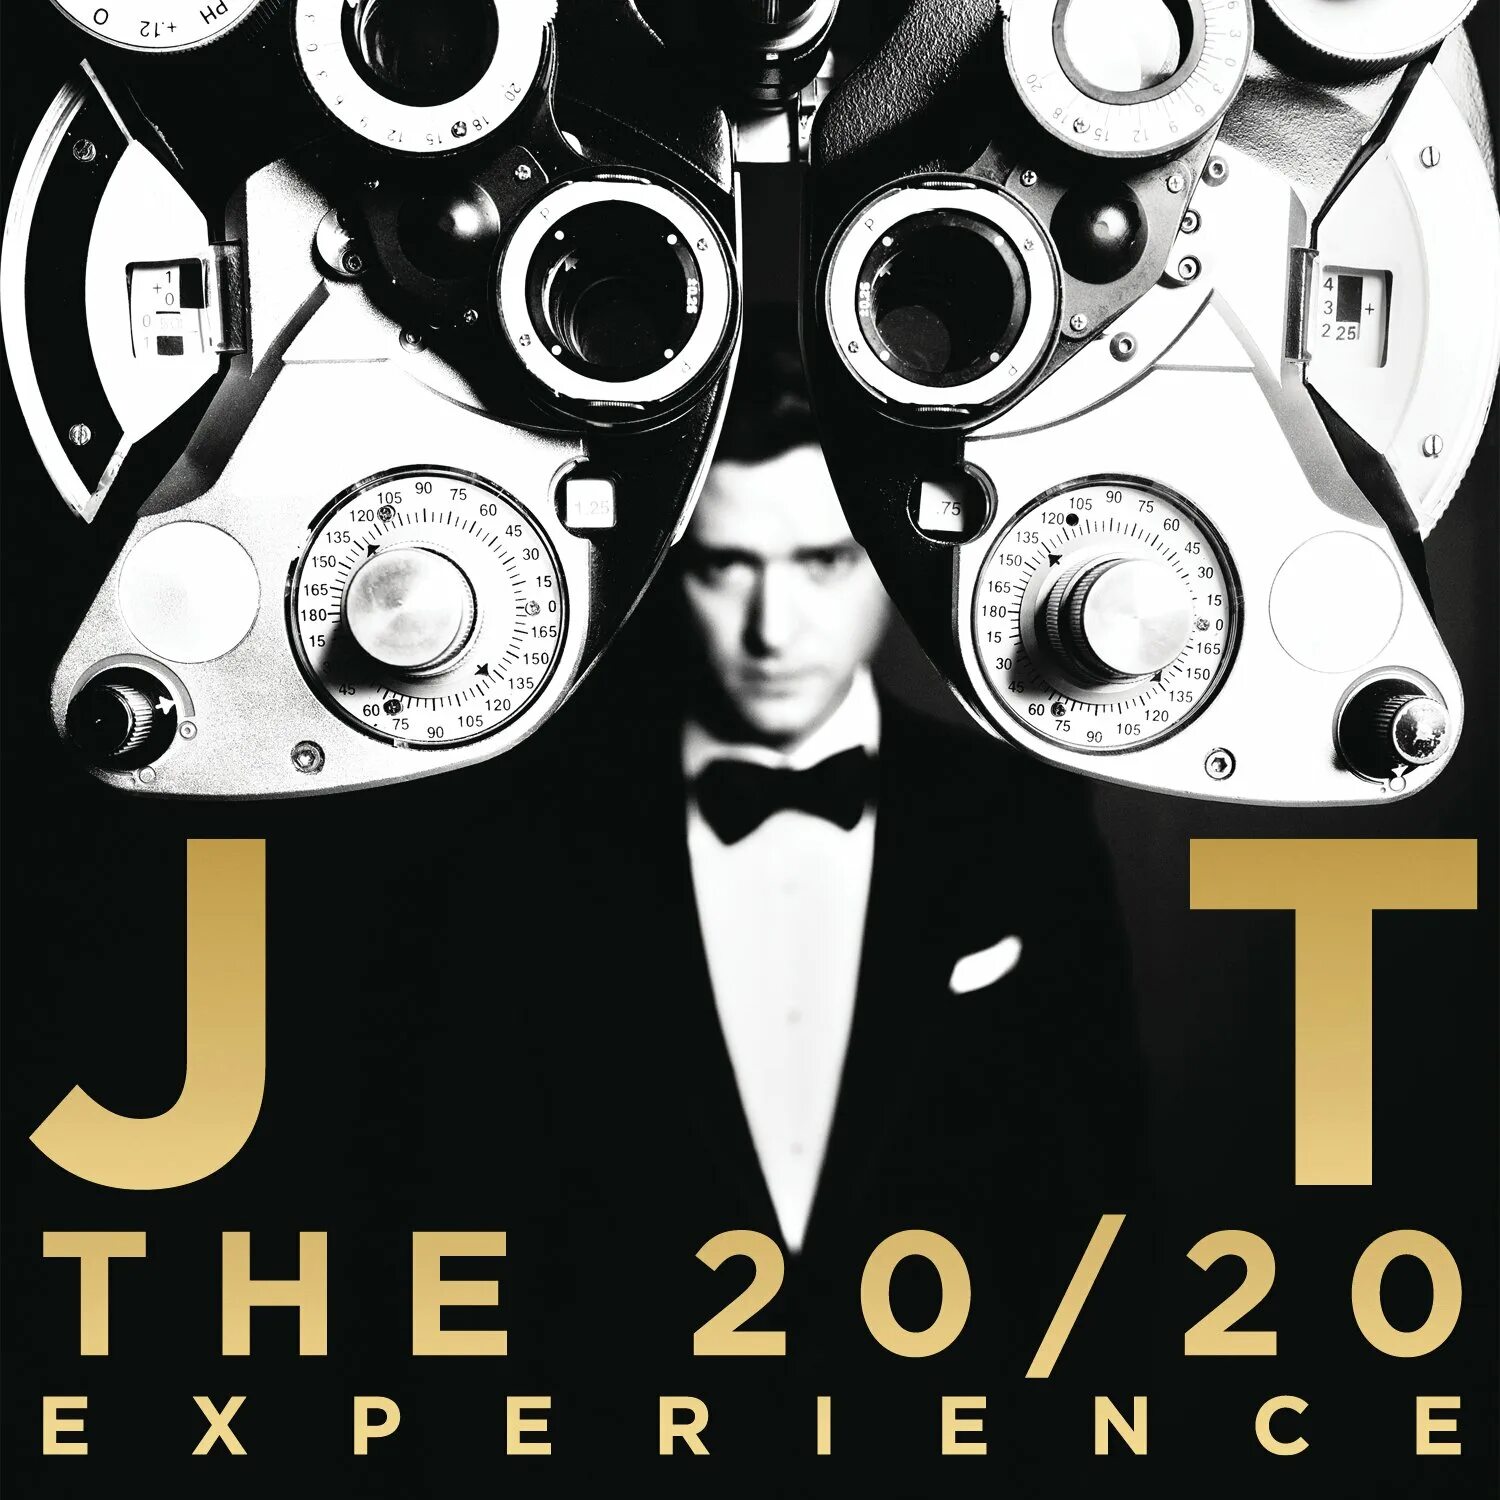 20 20 experience. Justin Timberlake 20/20 experience. Justin Timberlake 20/20 experience Cover. Джастин Тимберлейк альбомы. Justin Timberlake обложка альбома.